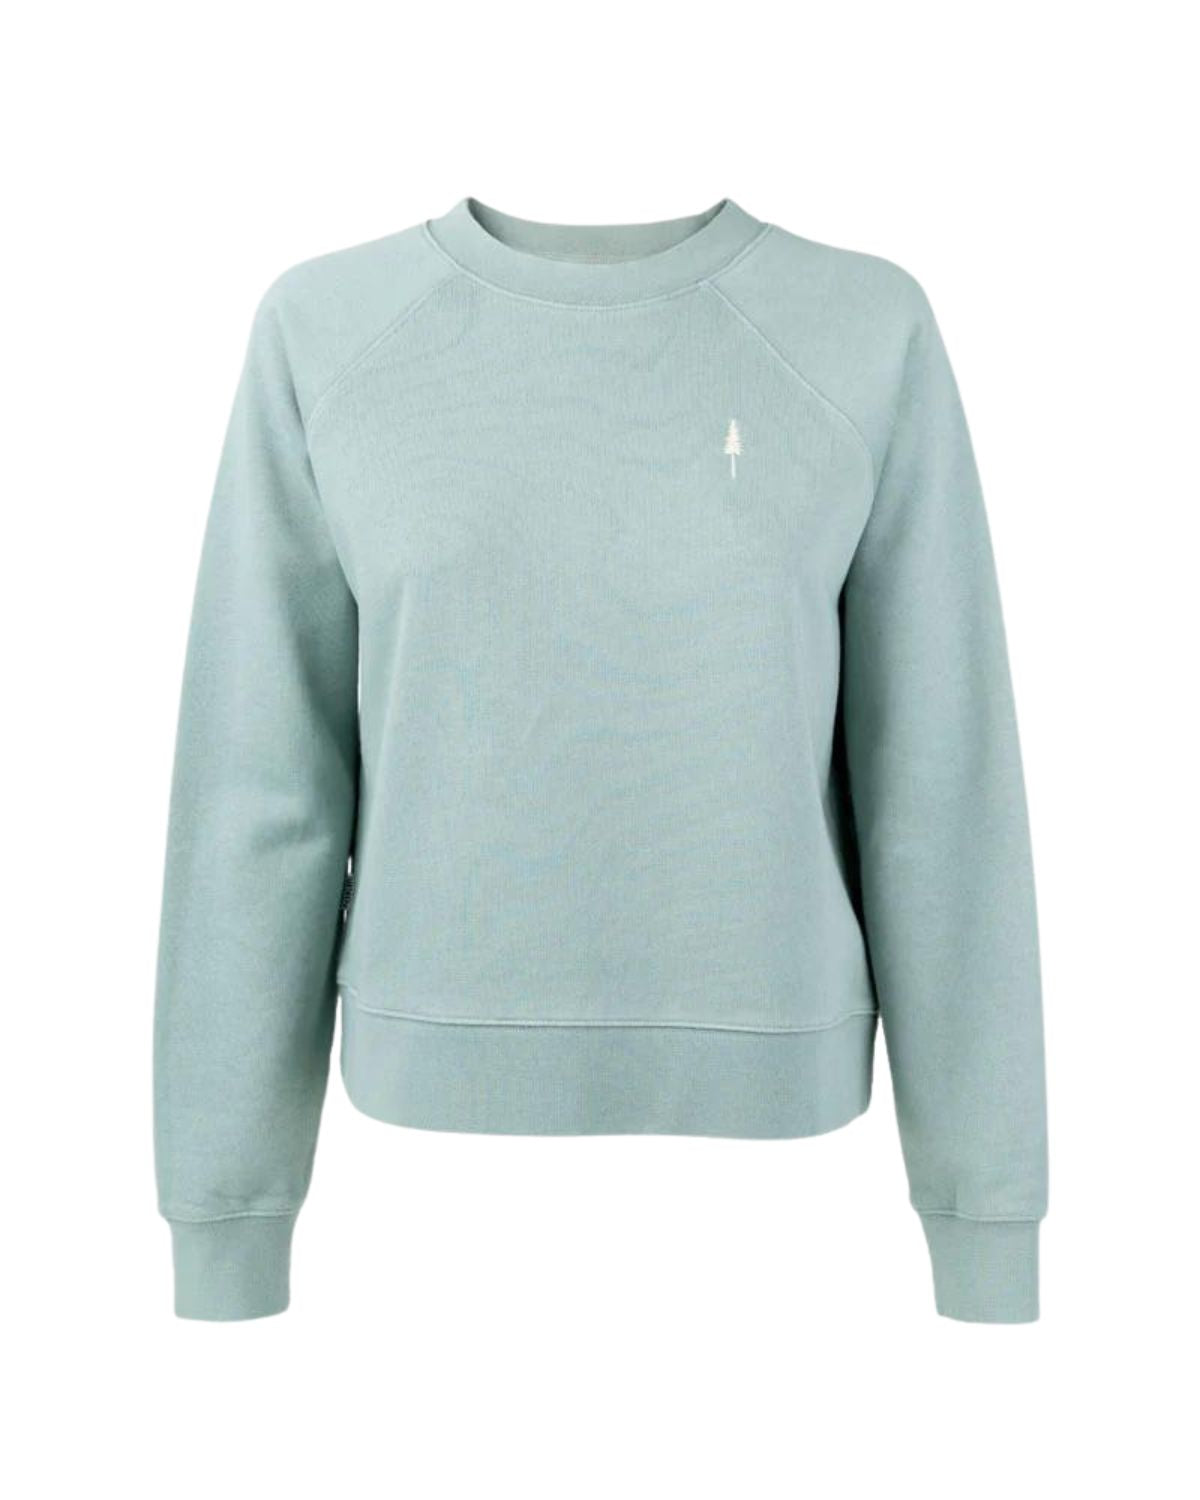 Treesweater Raglan Turquoise - Sweatshirt Damen